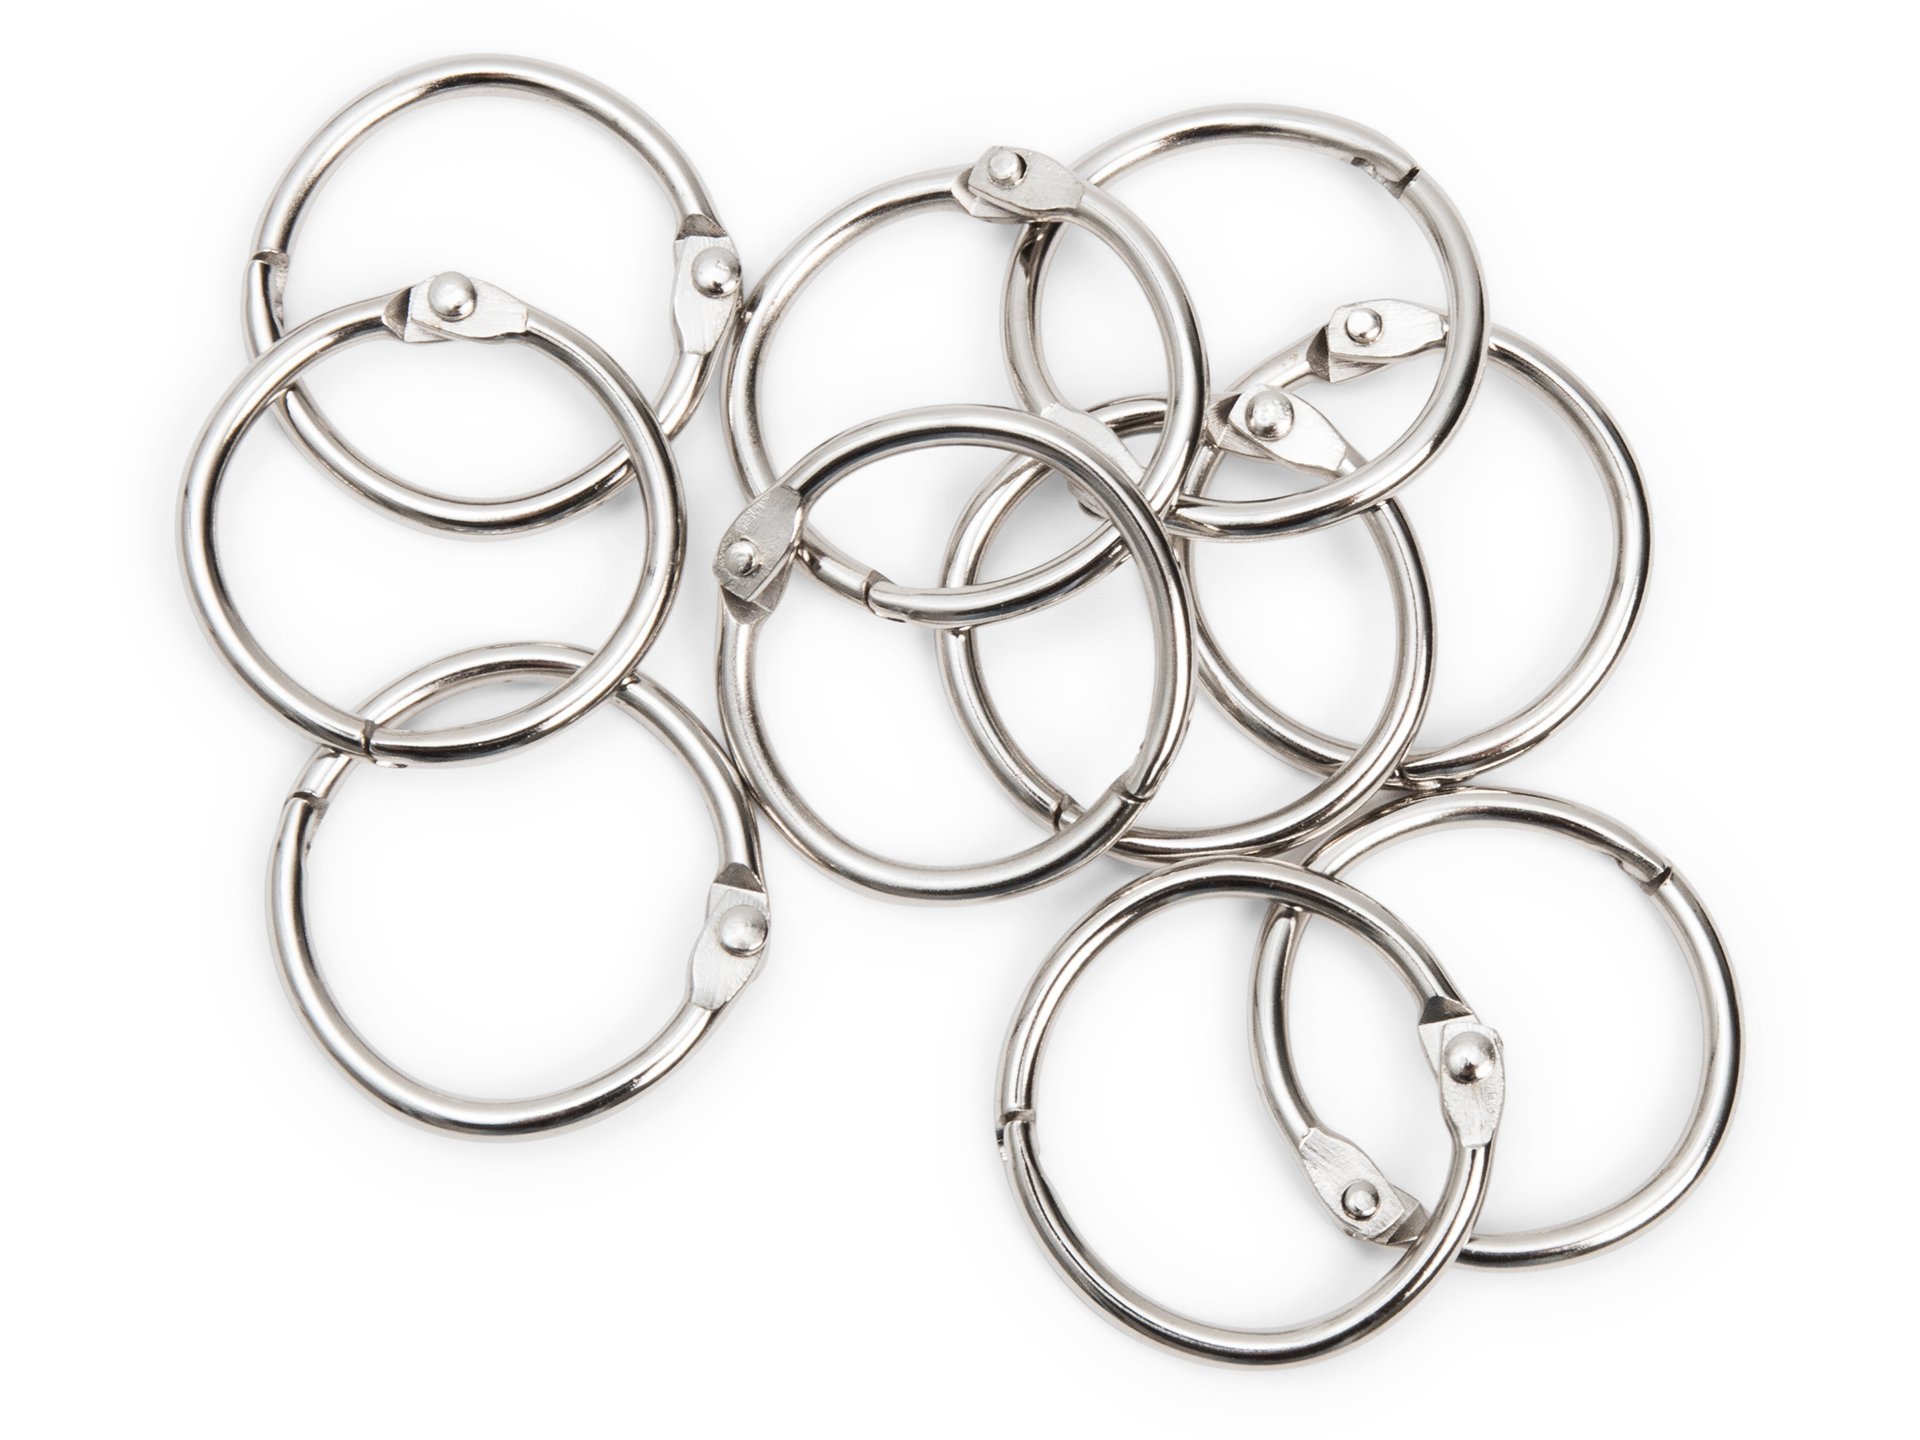 10 stk Metall Ring Loseblatt Buchring Schlüsselring Aufklappbar DIY Basteln 25mm 